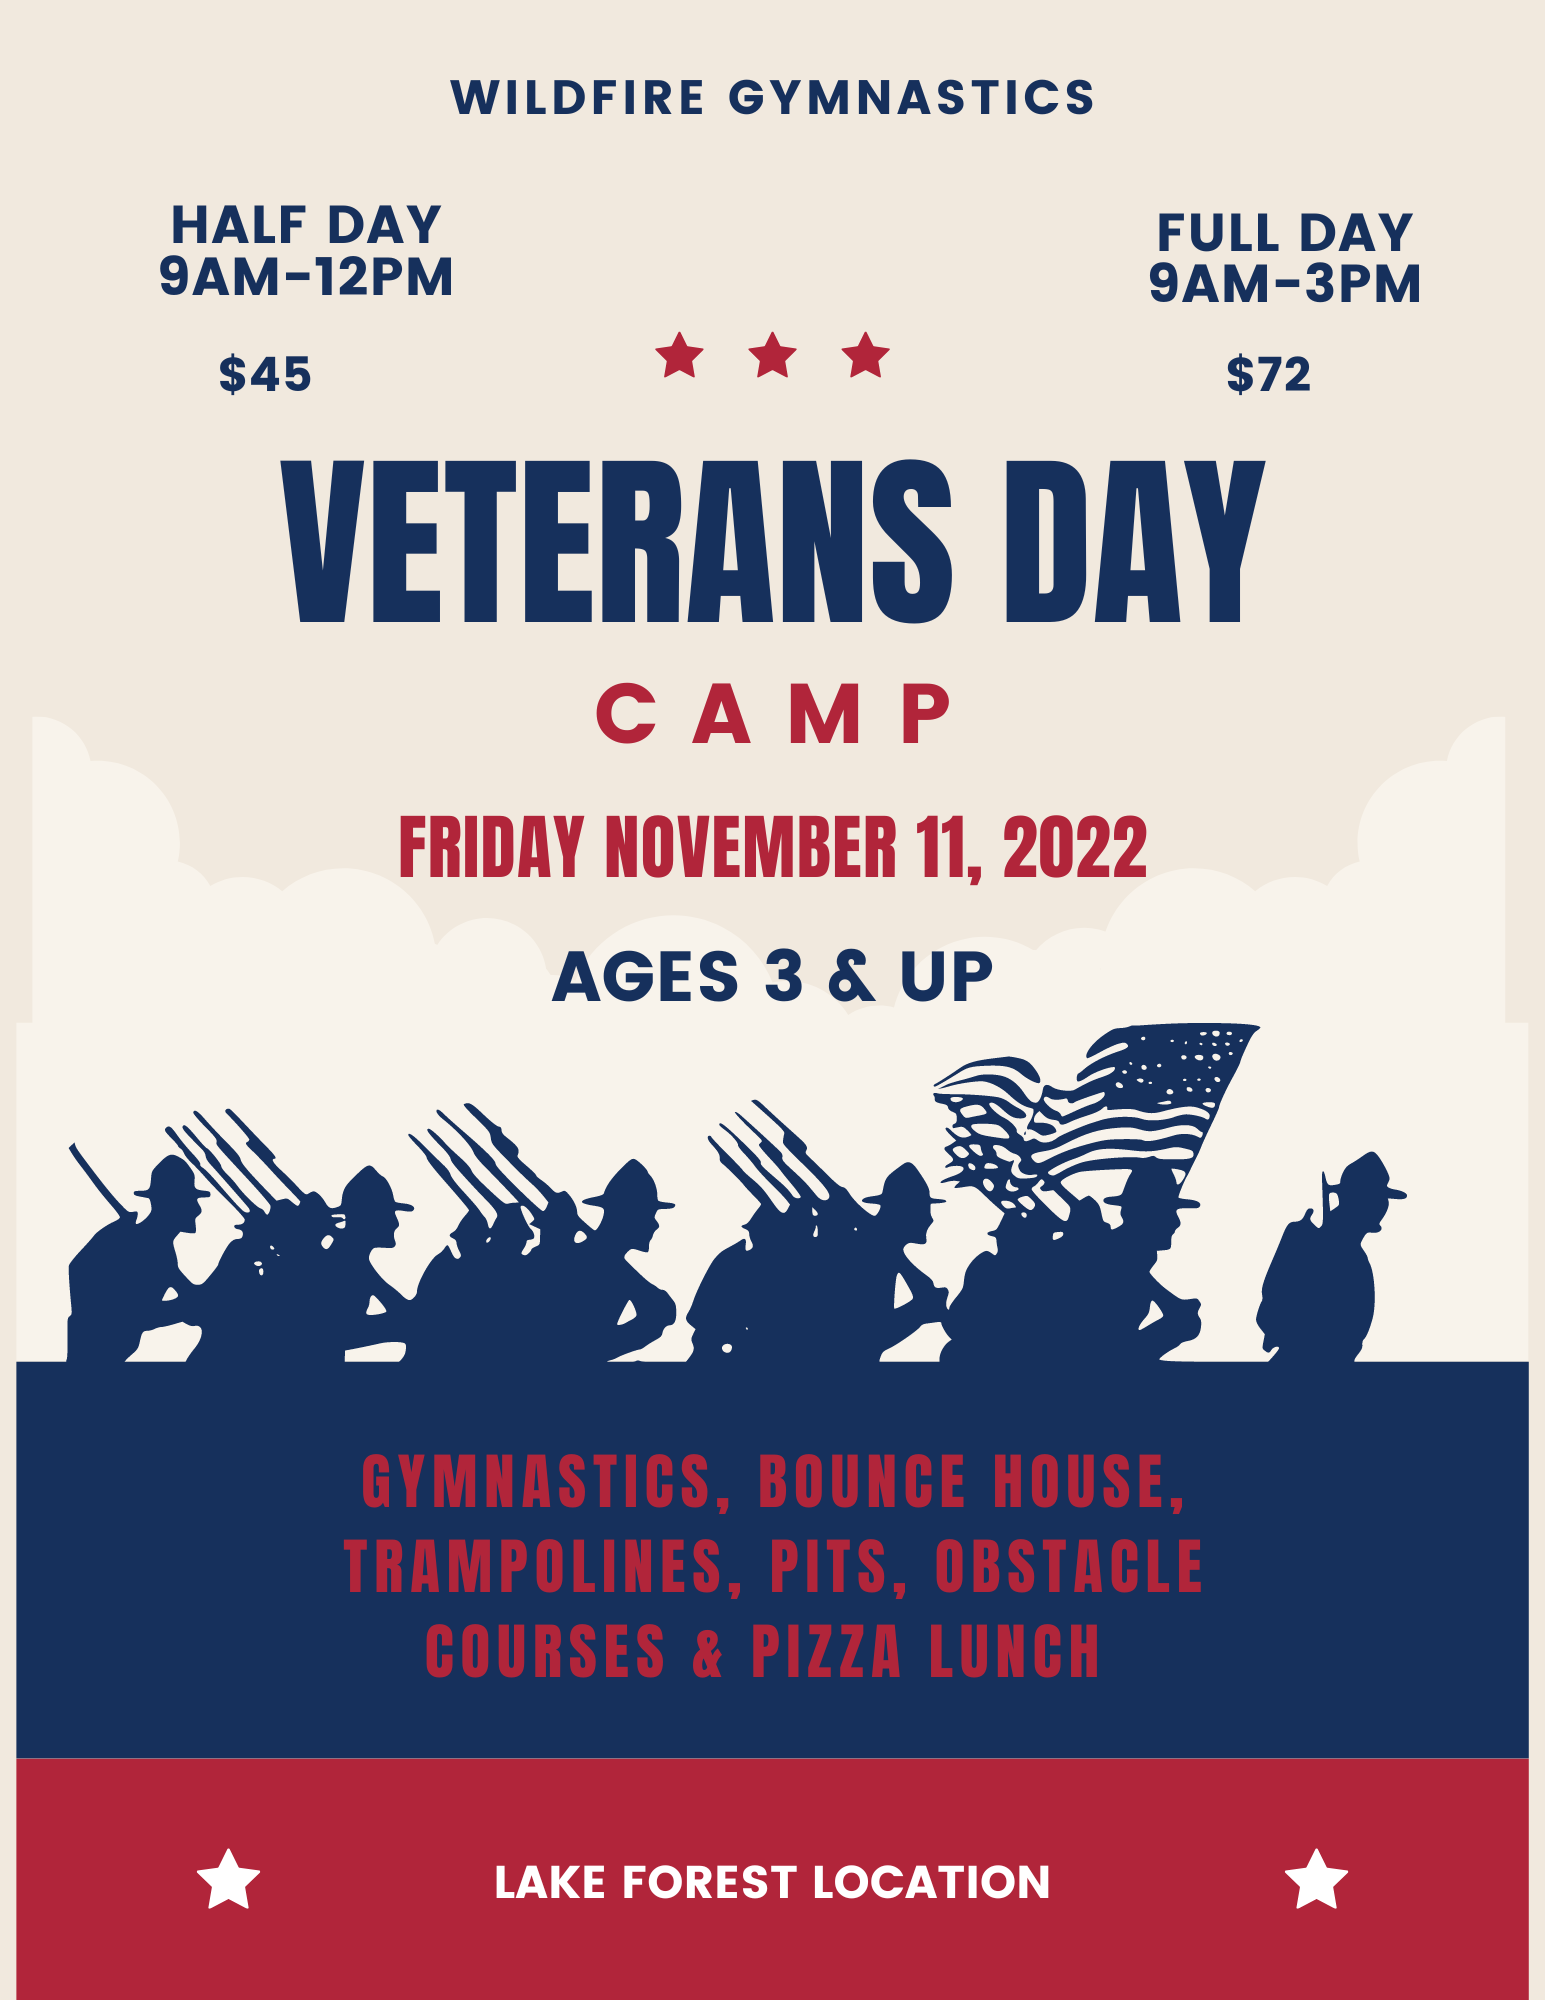 Veterans Day Camp Flyer 2022